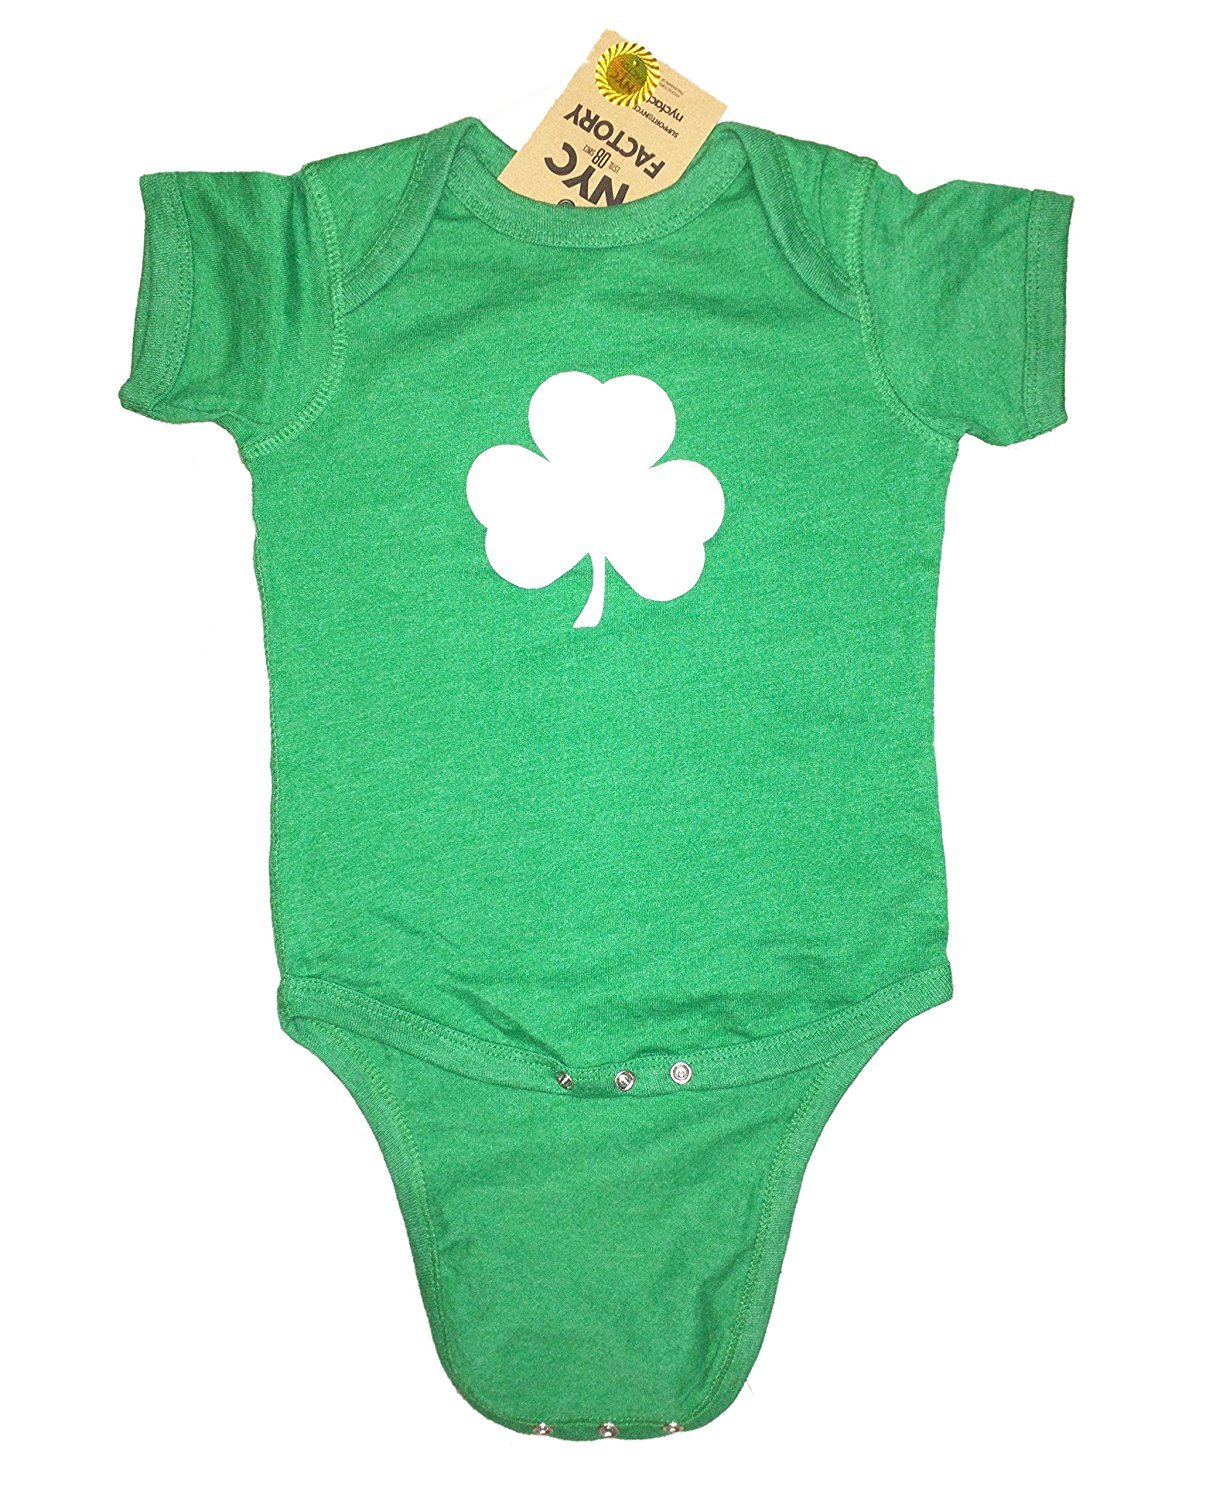 Shamrock Baby Bodysuit (Solid Design, Irish Green)